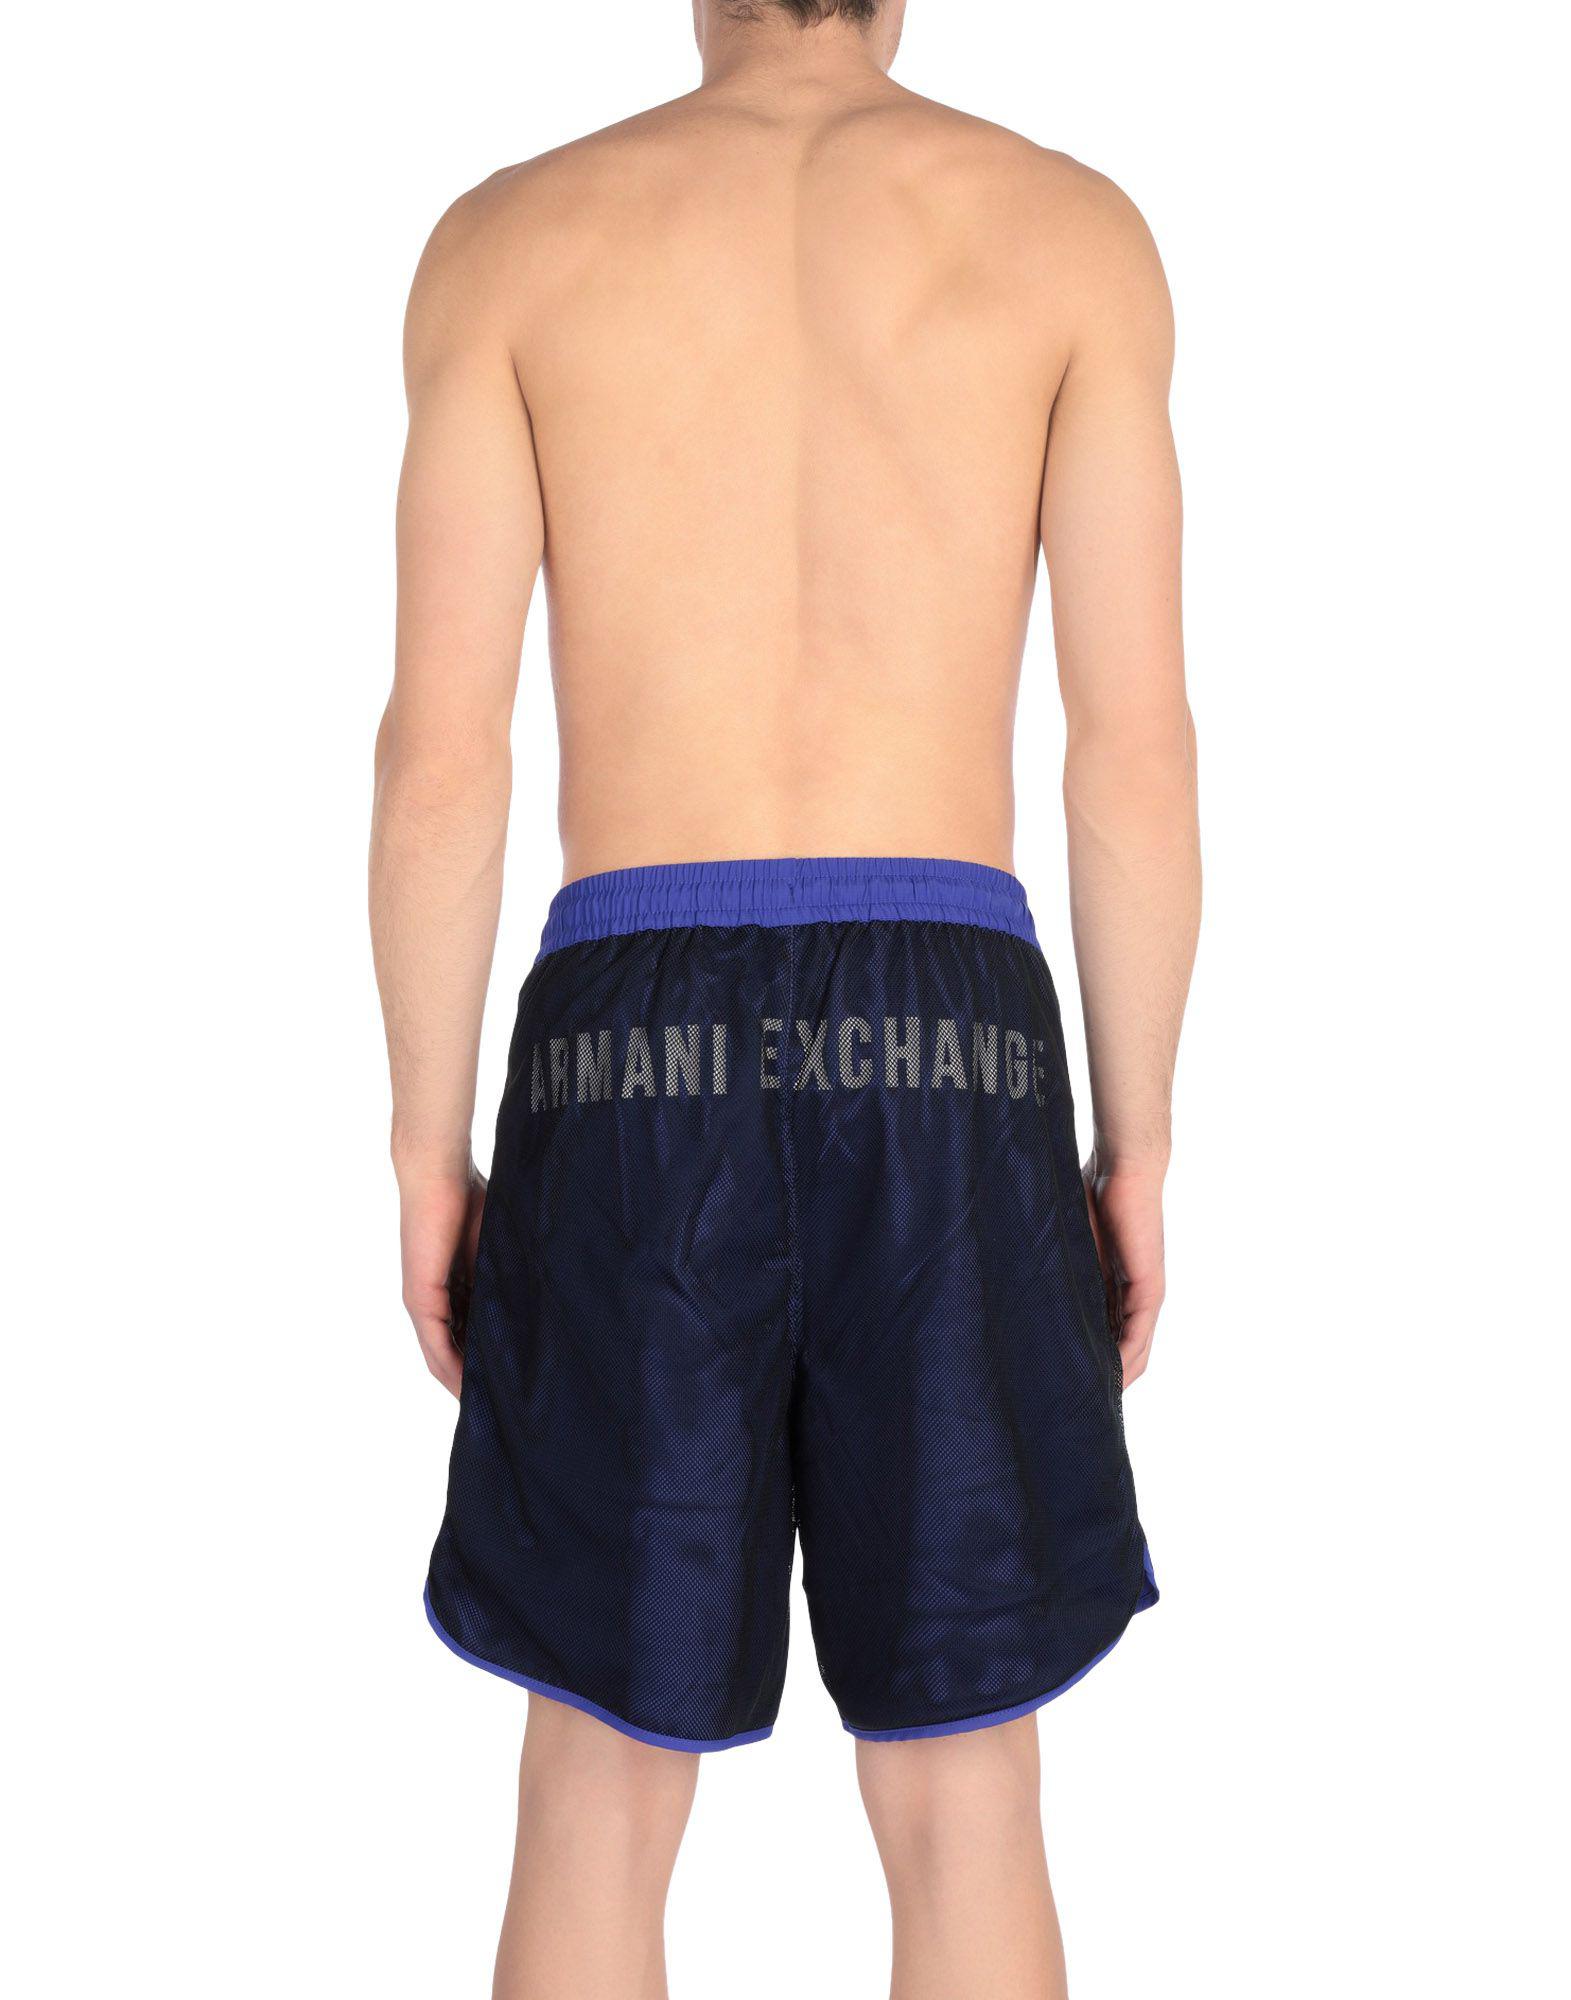 armani exchange swim trunks